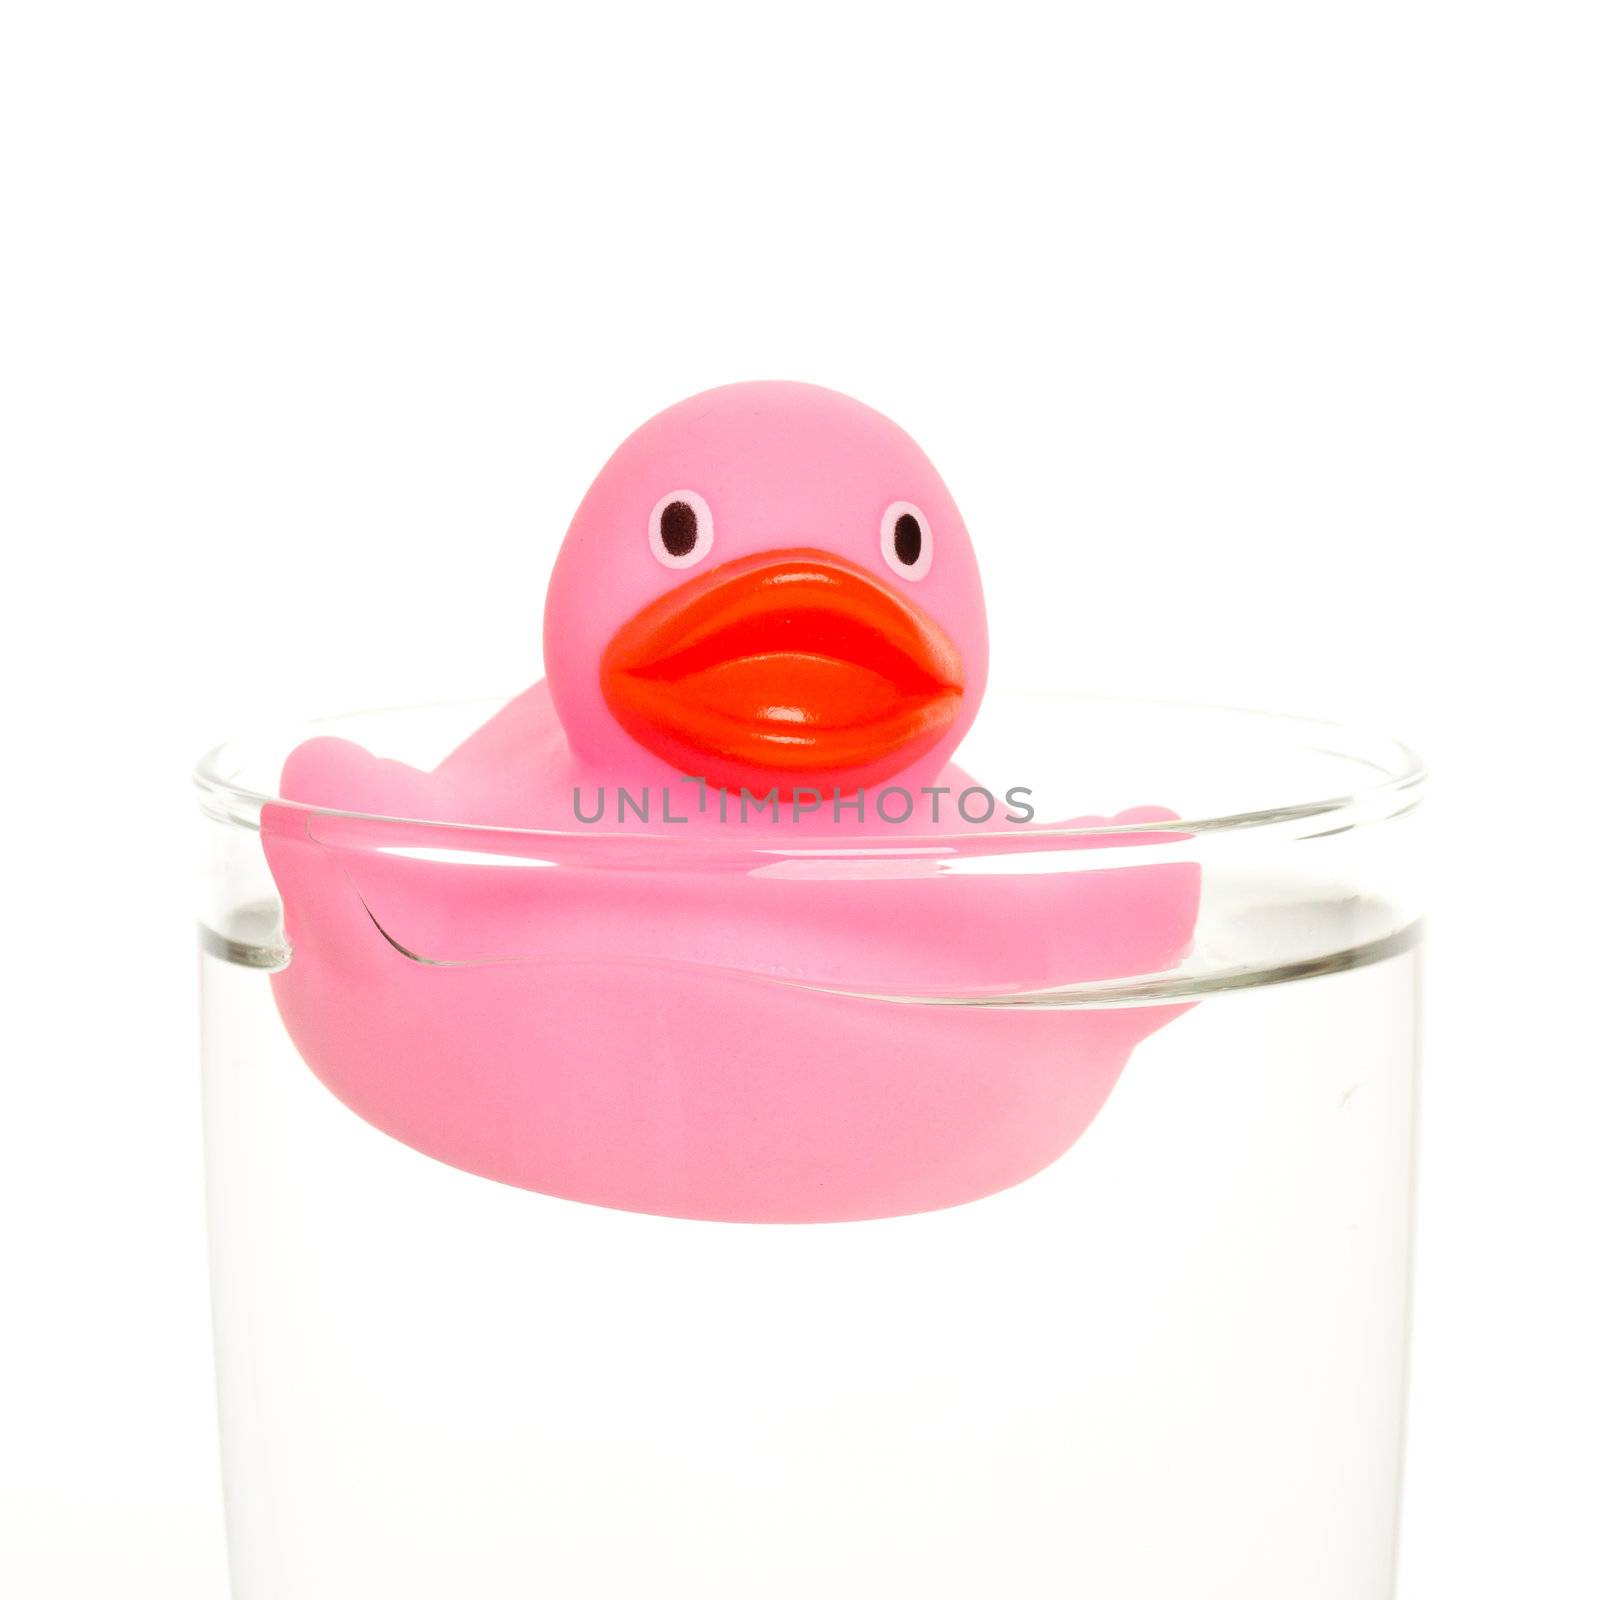 Pink duck by michaklootwijk